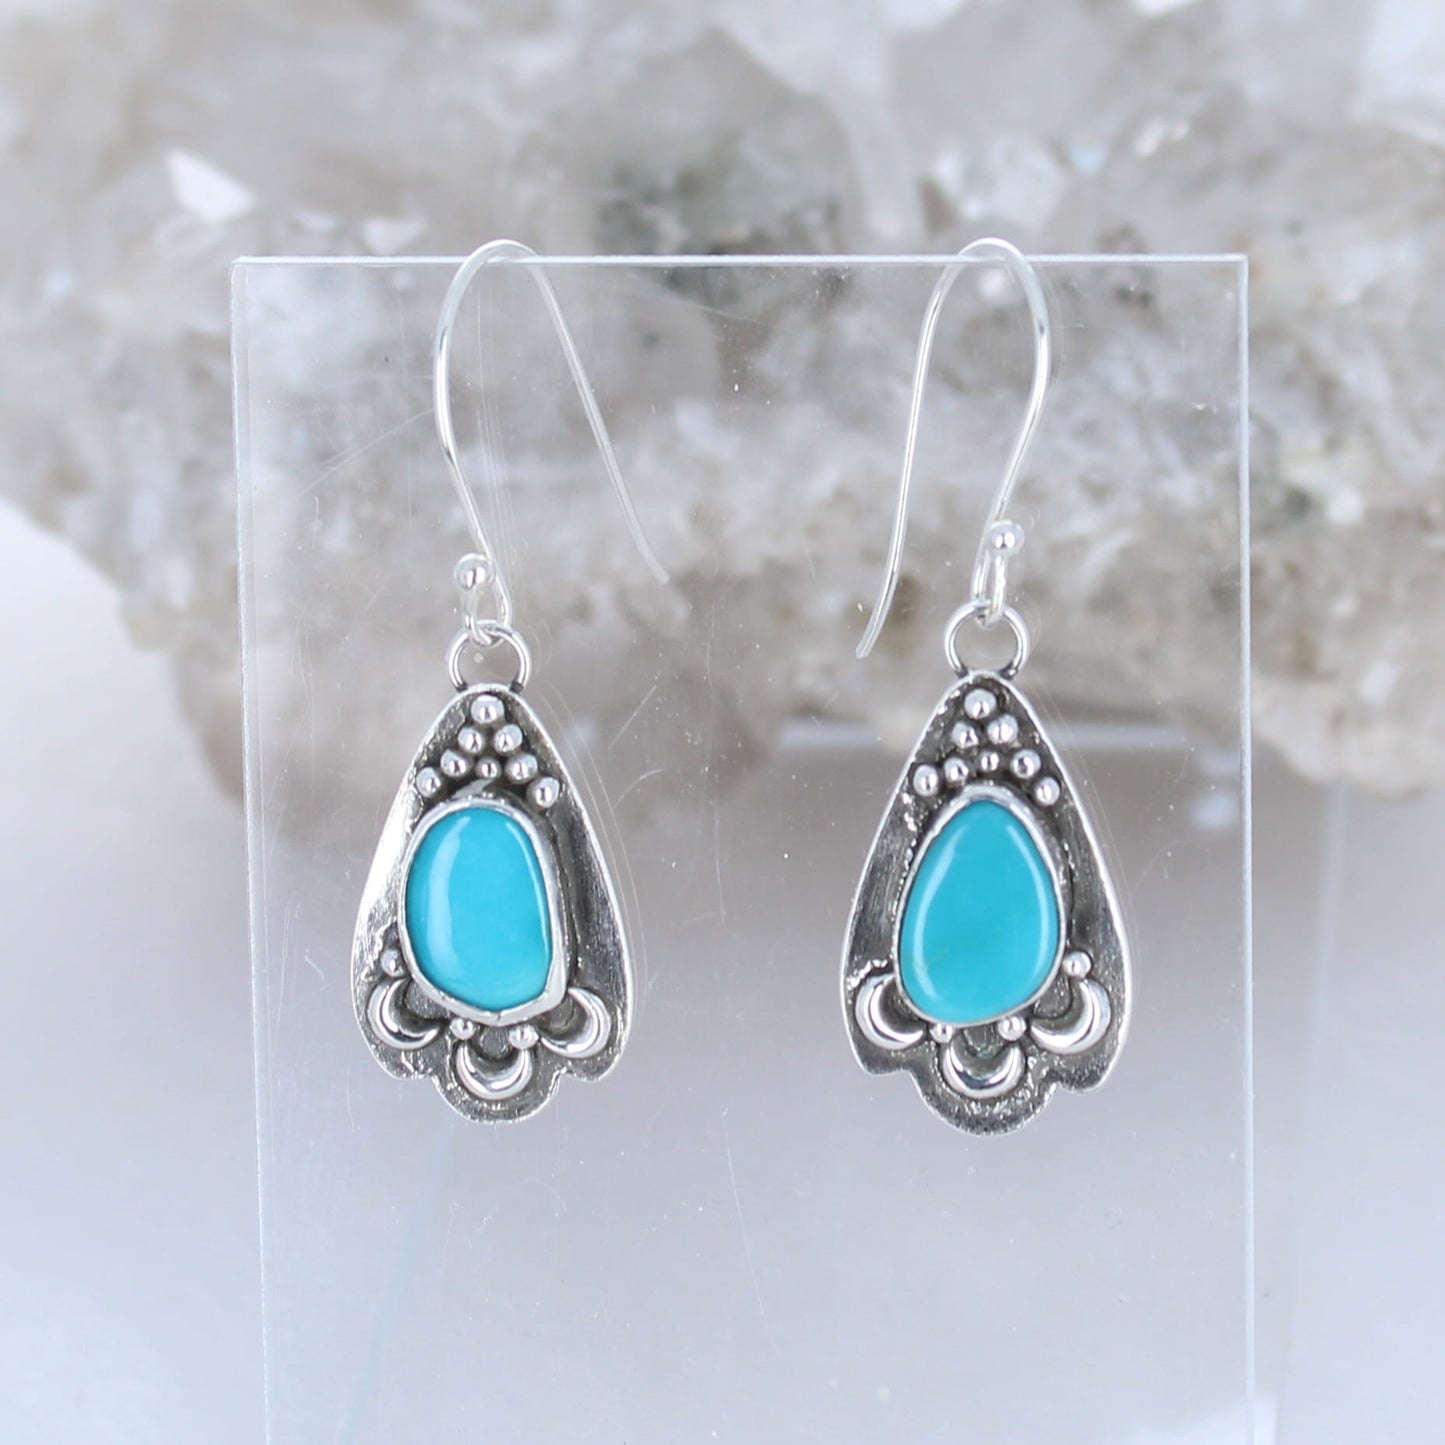 Beautiful Sky Blue Kingman Turquoise Earrings Teardrops with Moon Design